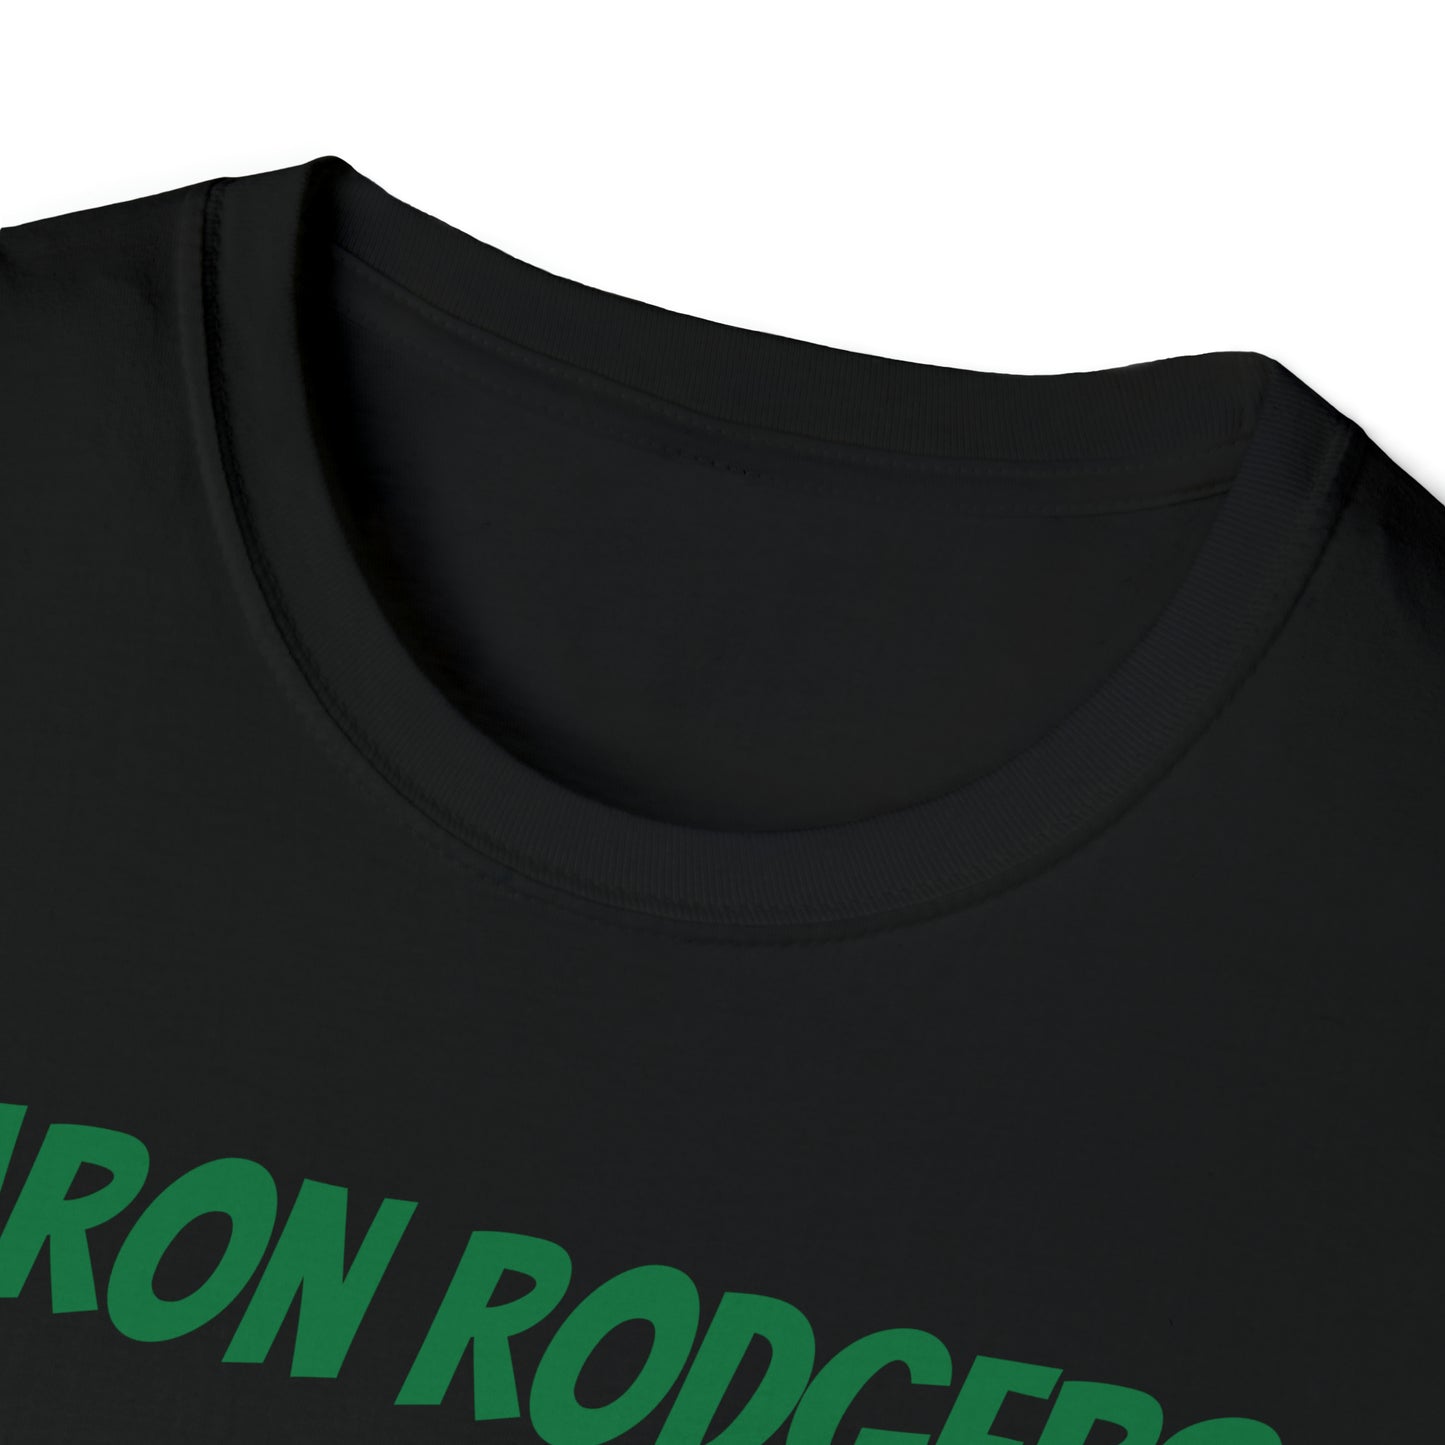 Aaron Rodgers Is Good Shirt